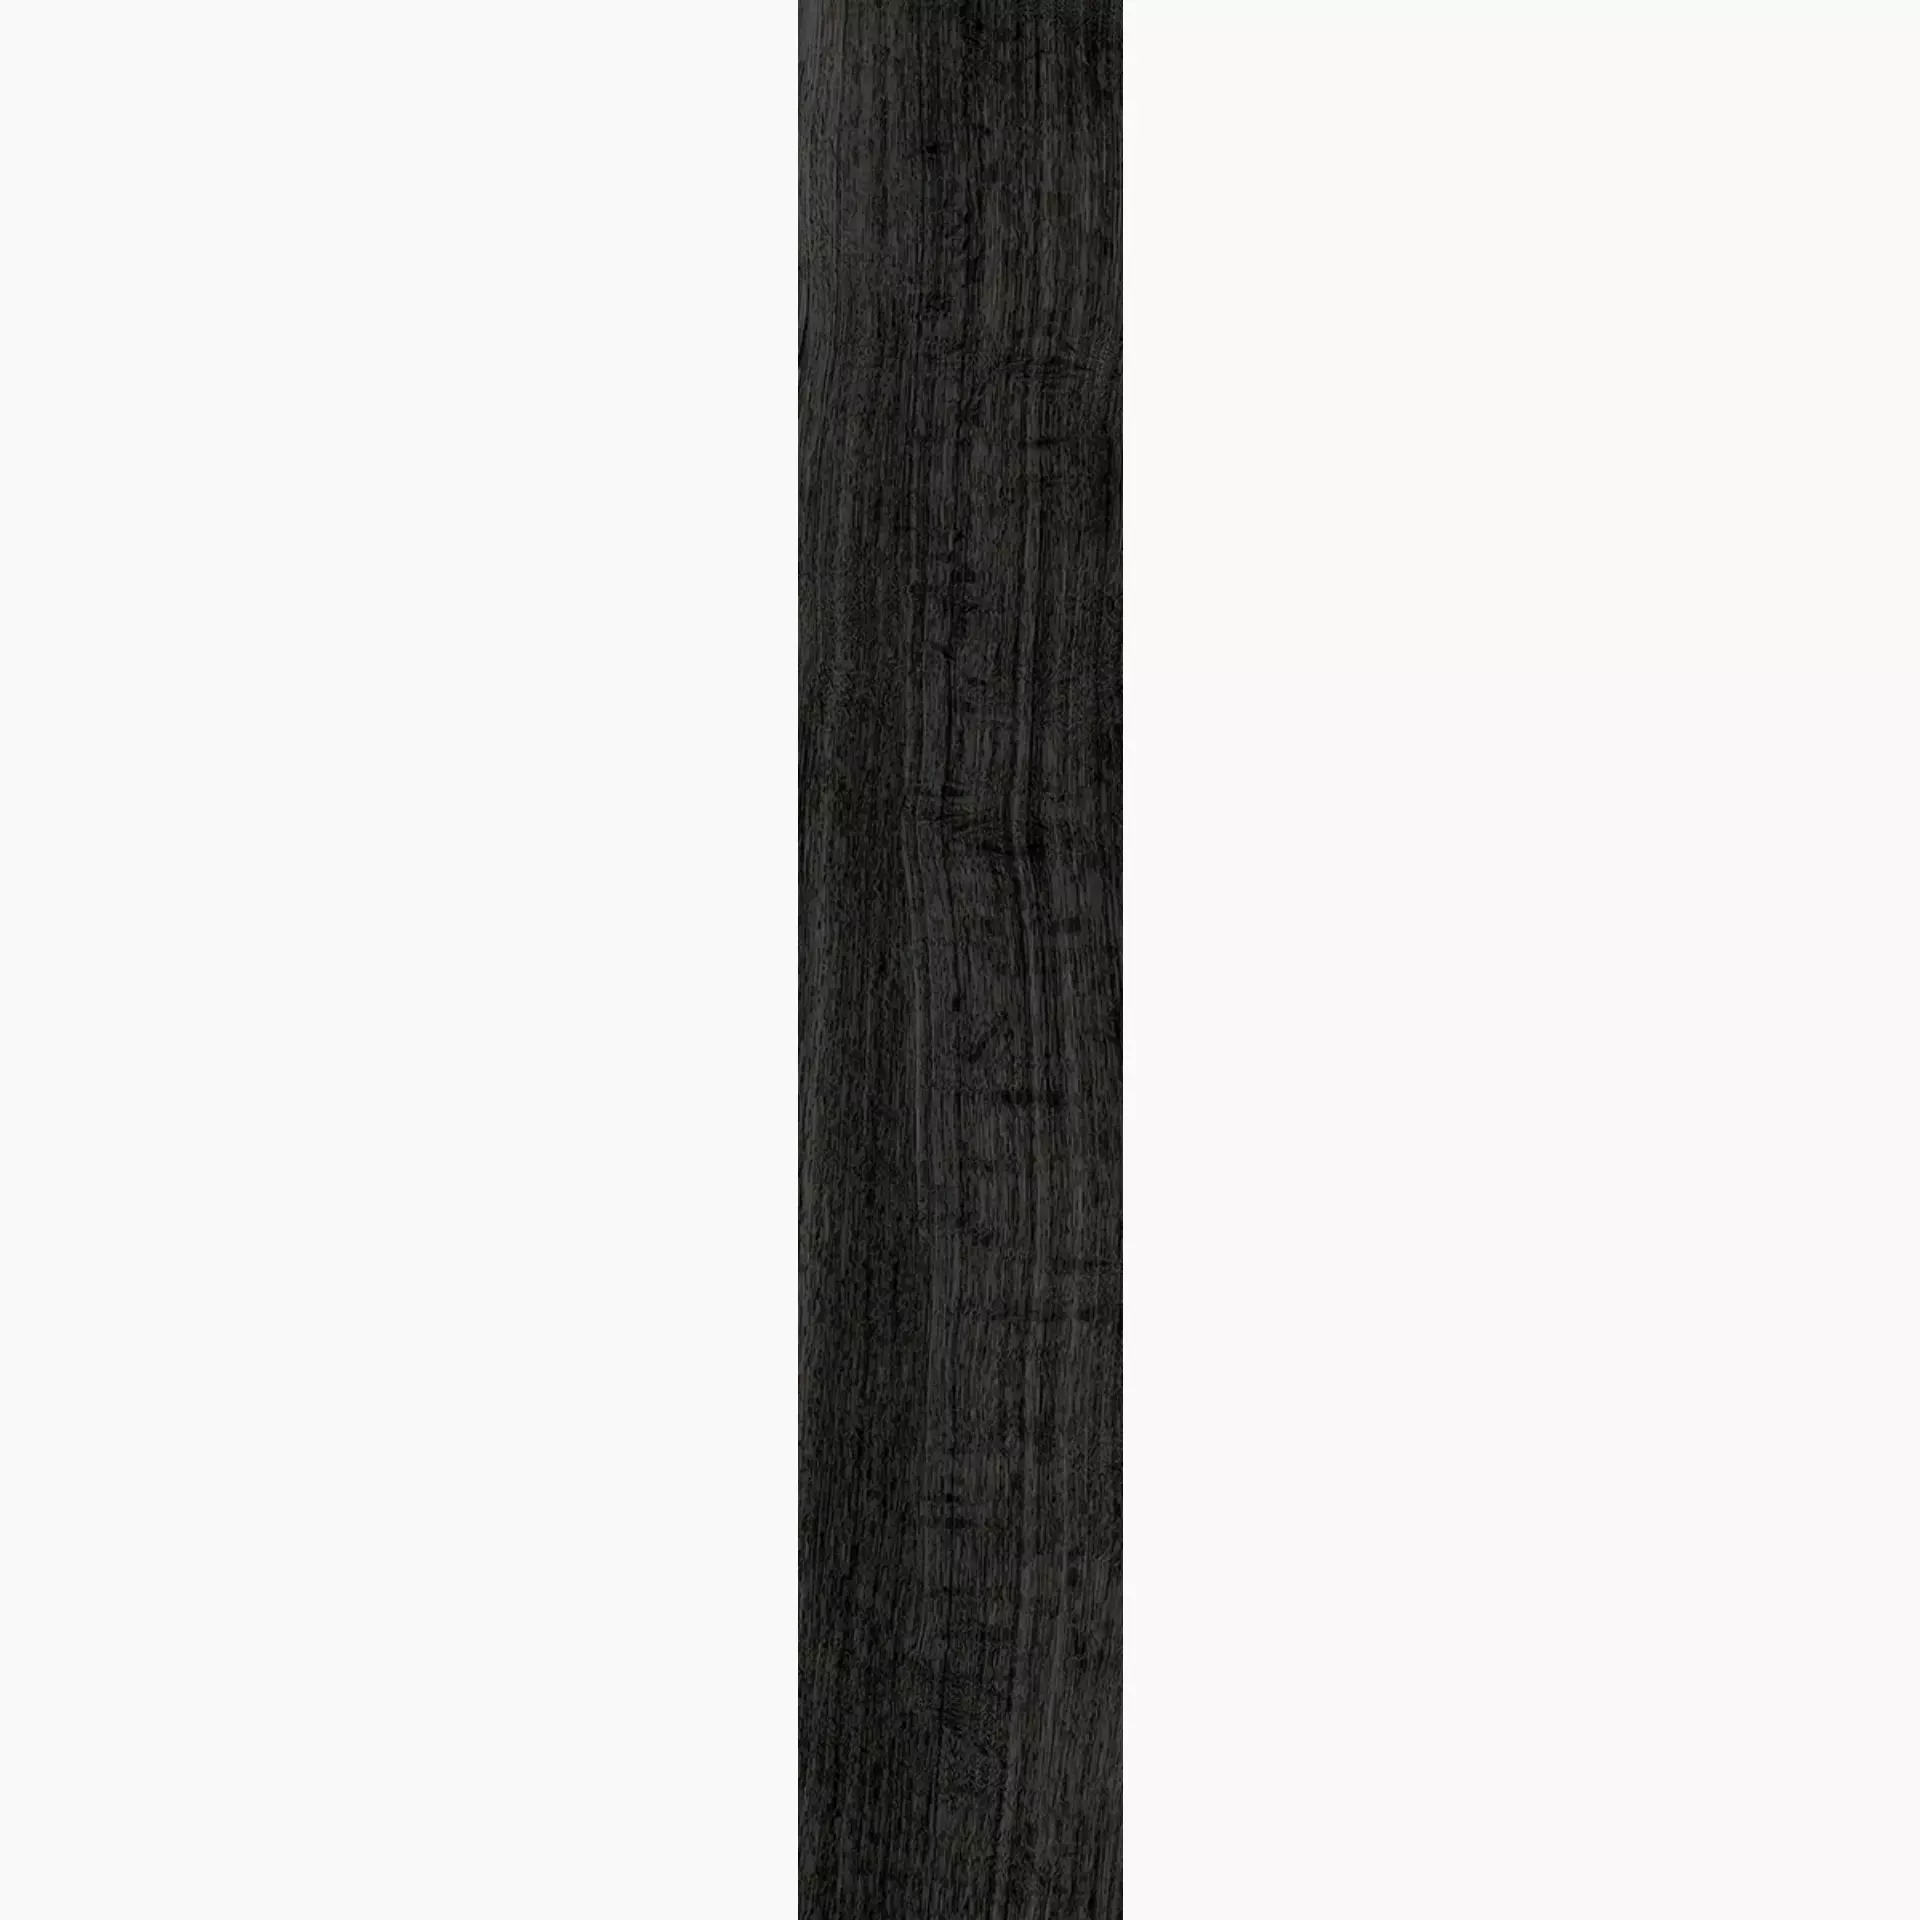 Rondine Living Nero Naturale J86351 7,5x45cm 8,5mm